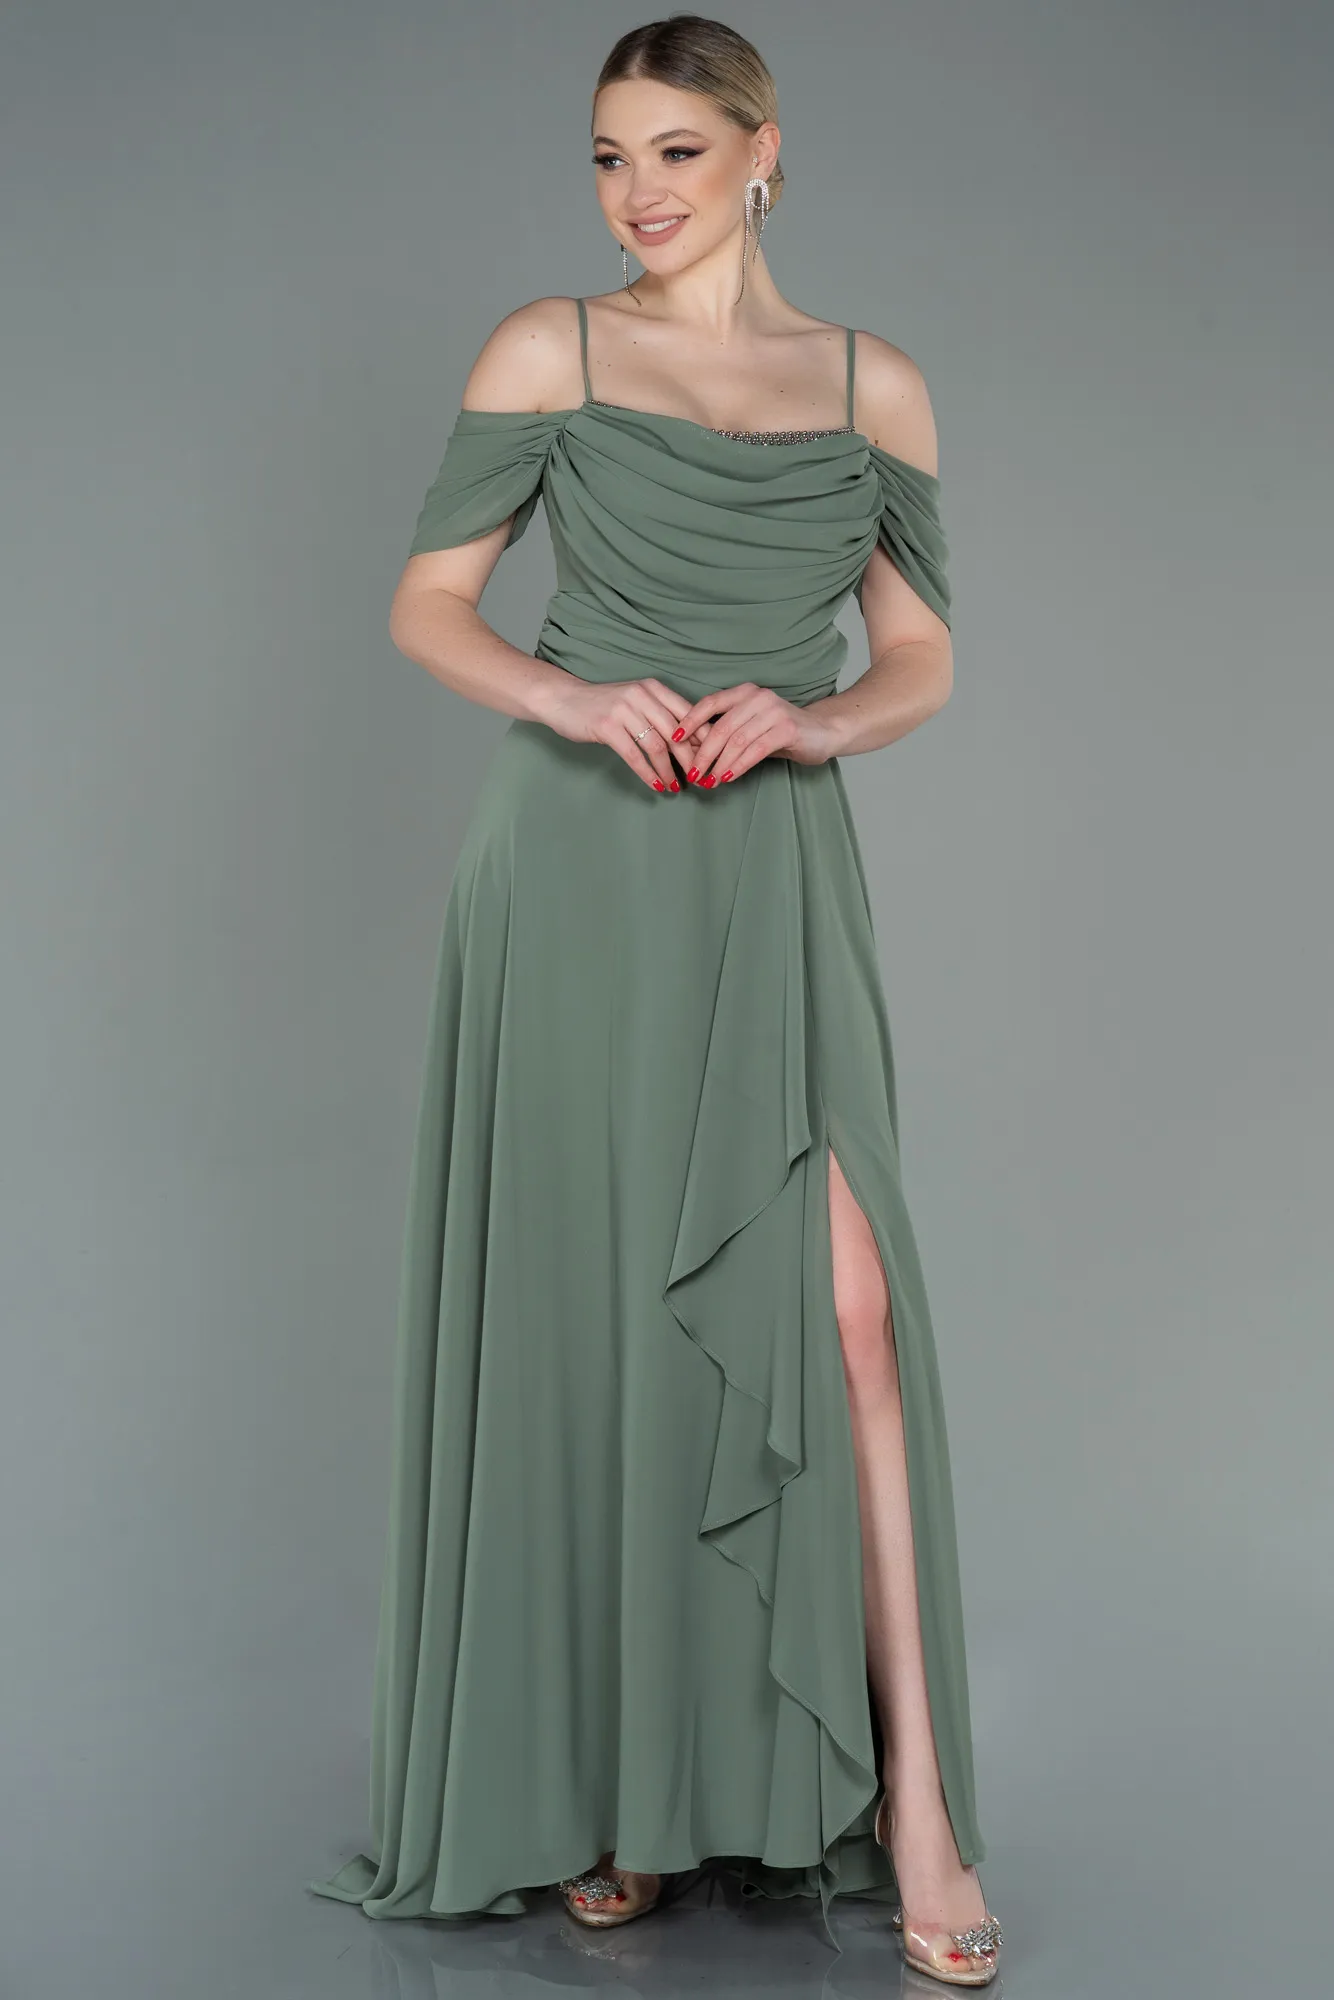 Olive Drab-Long Chiffon Evening Dress ABU3093